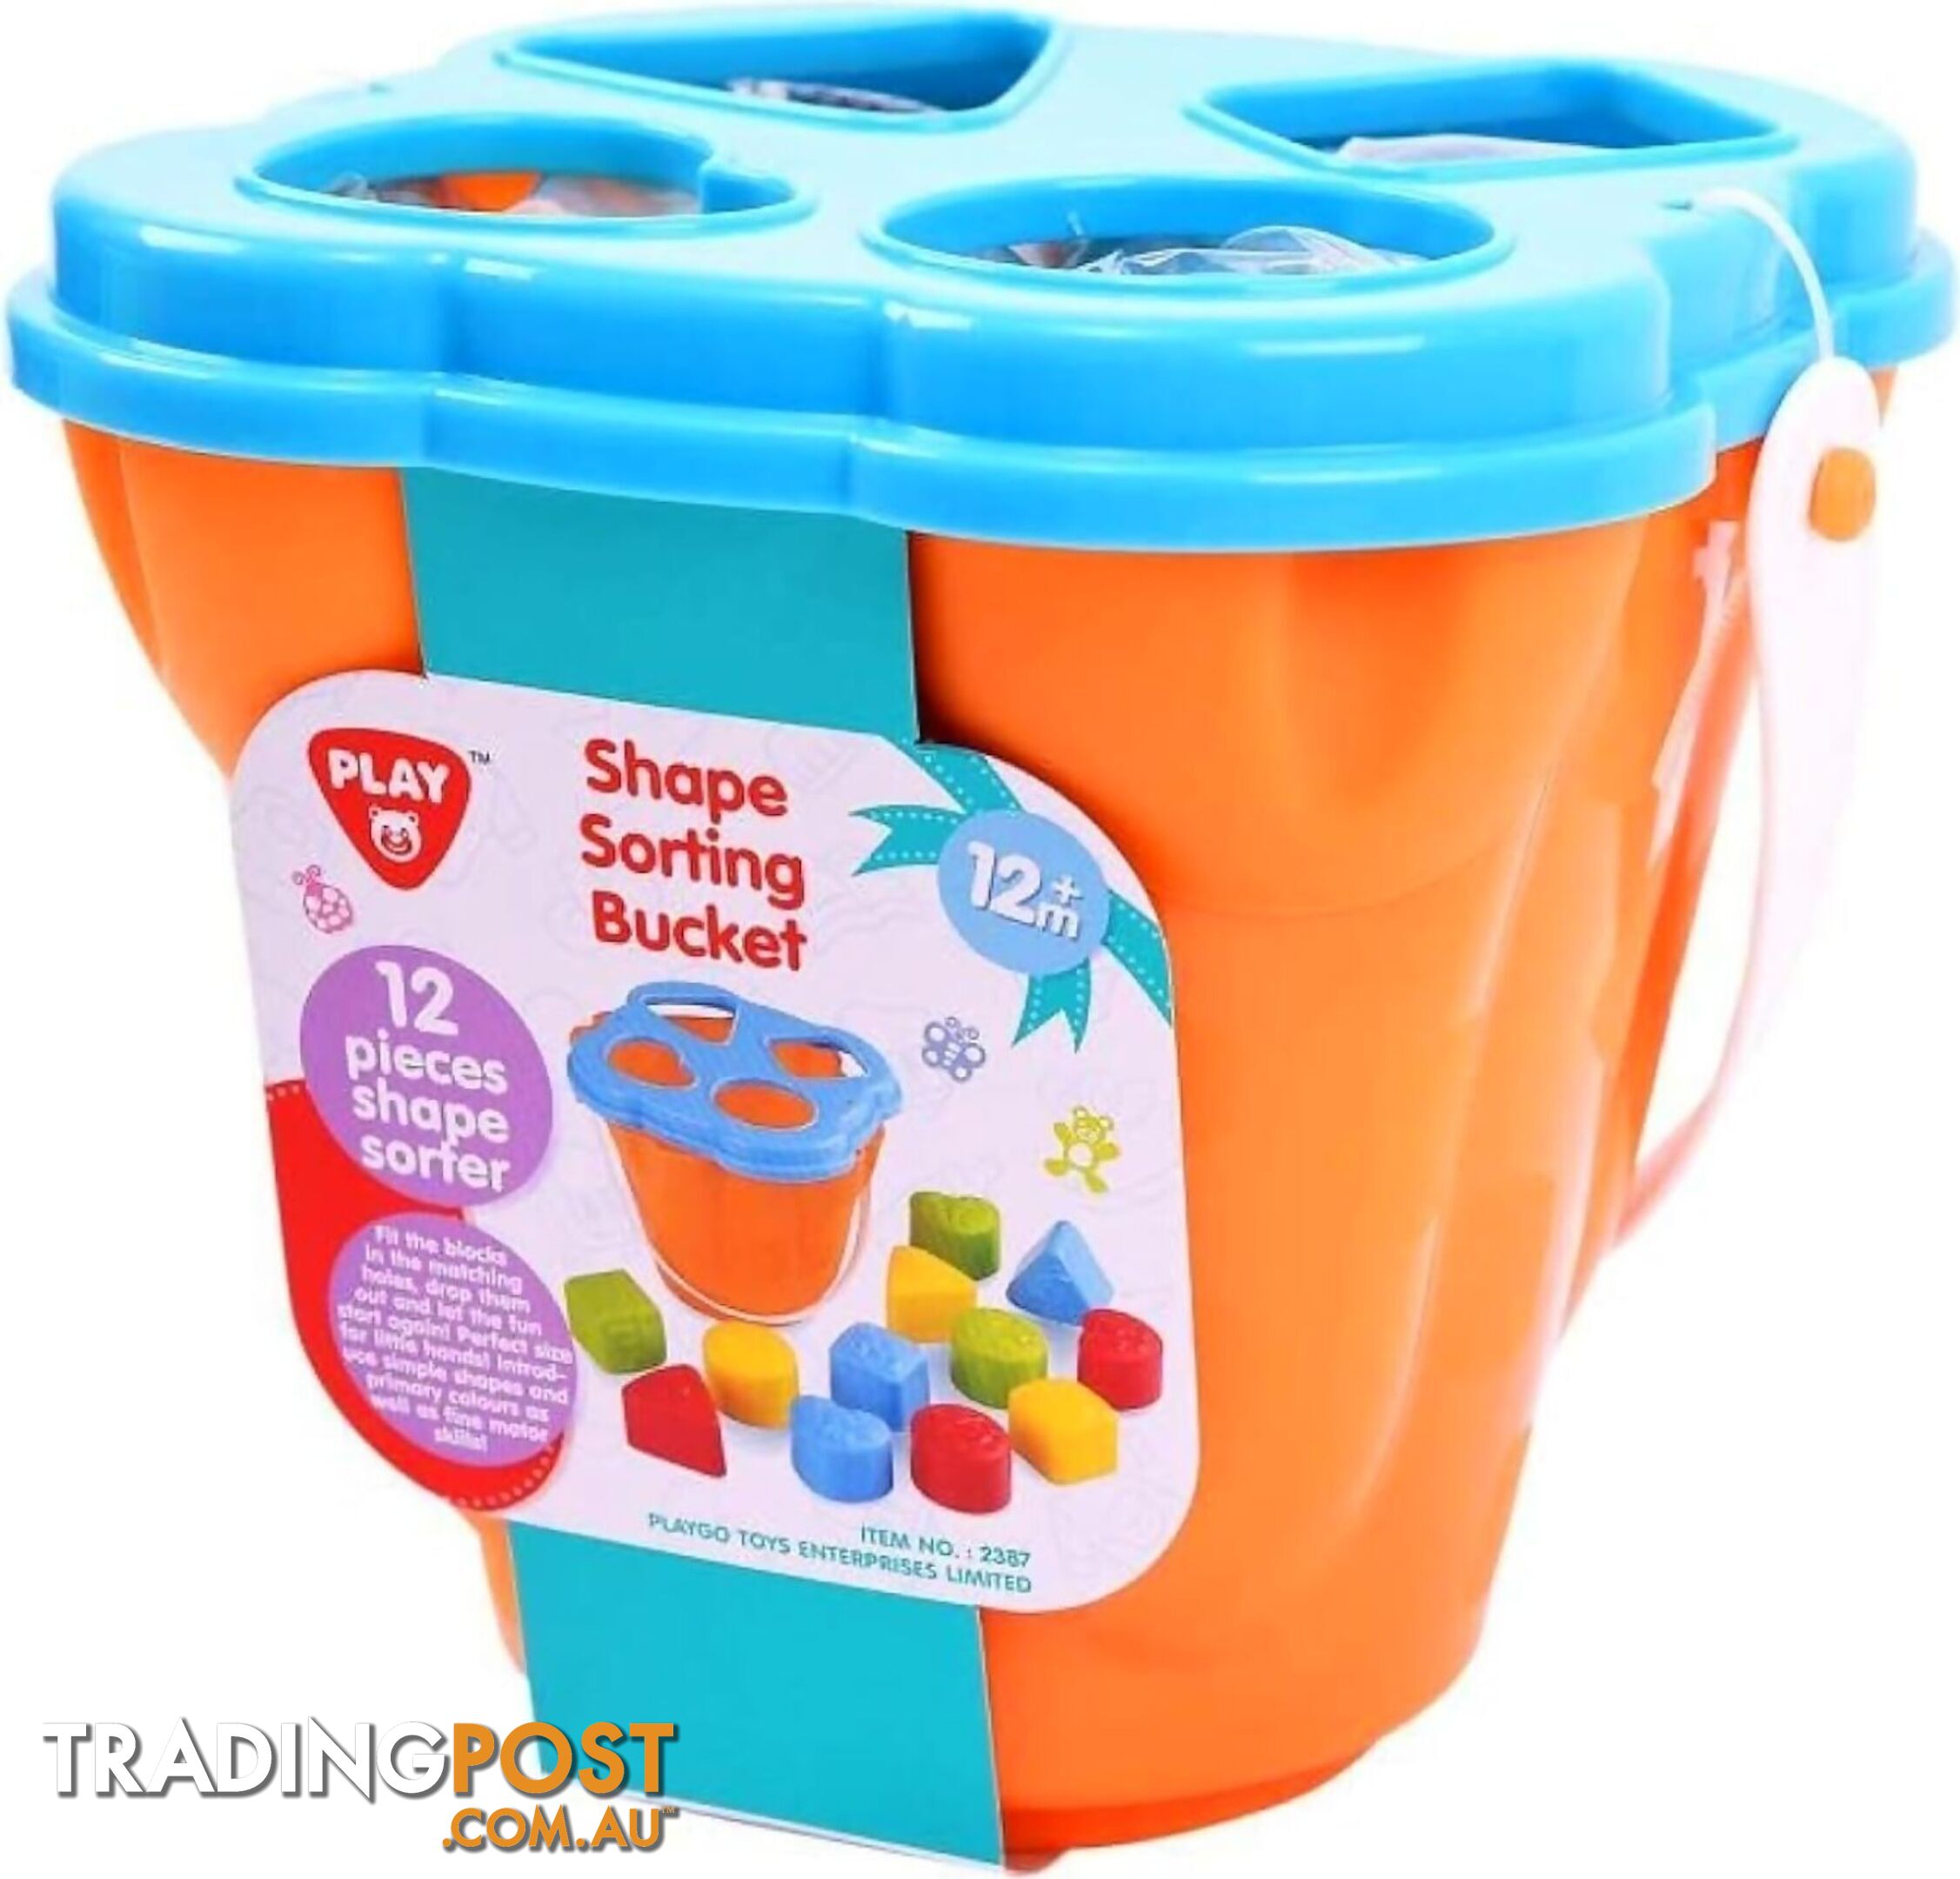 Playgo Toys Ent. Ltd. - Shape Sorting Bucket 12pc - Art67182 - 4892401023872